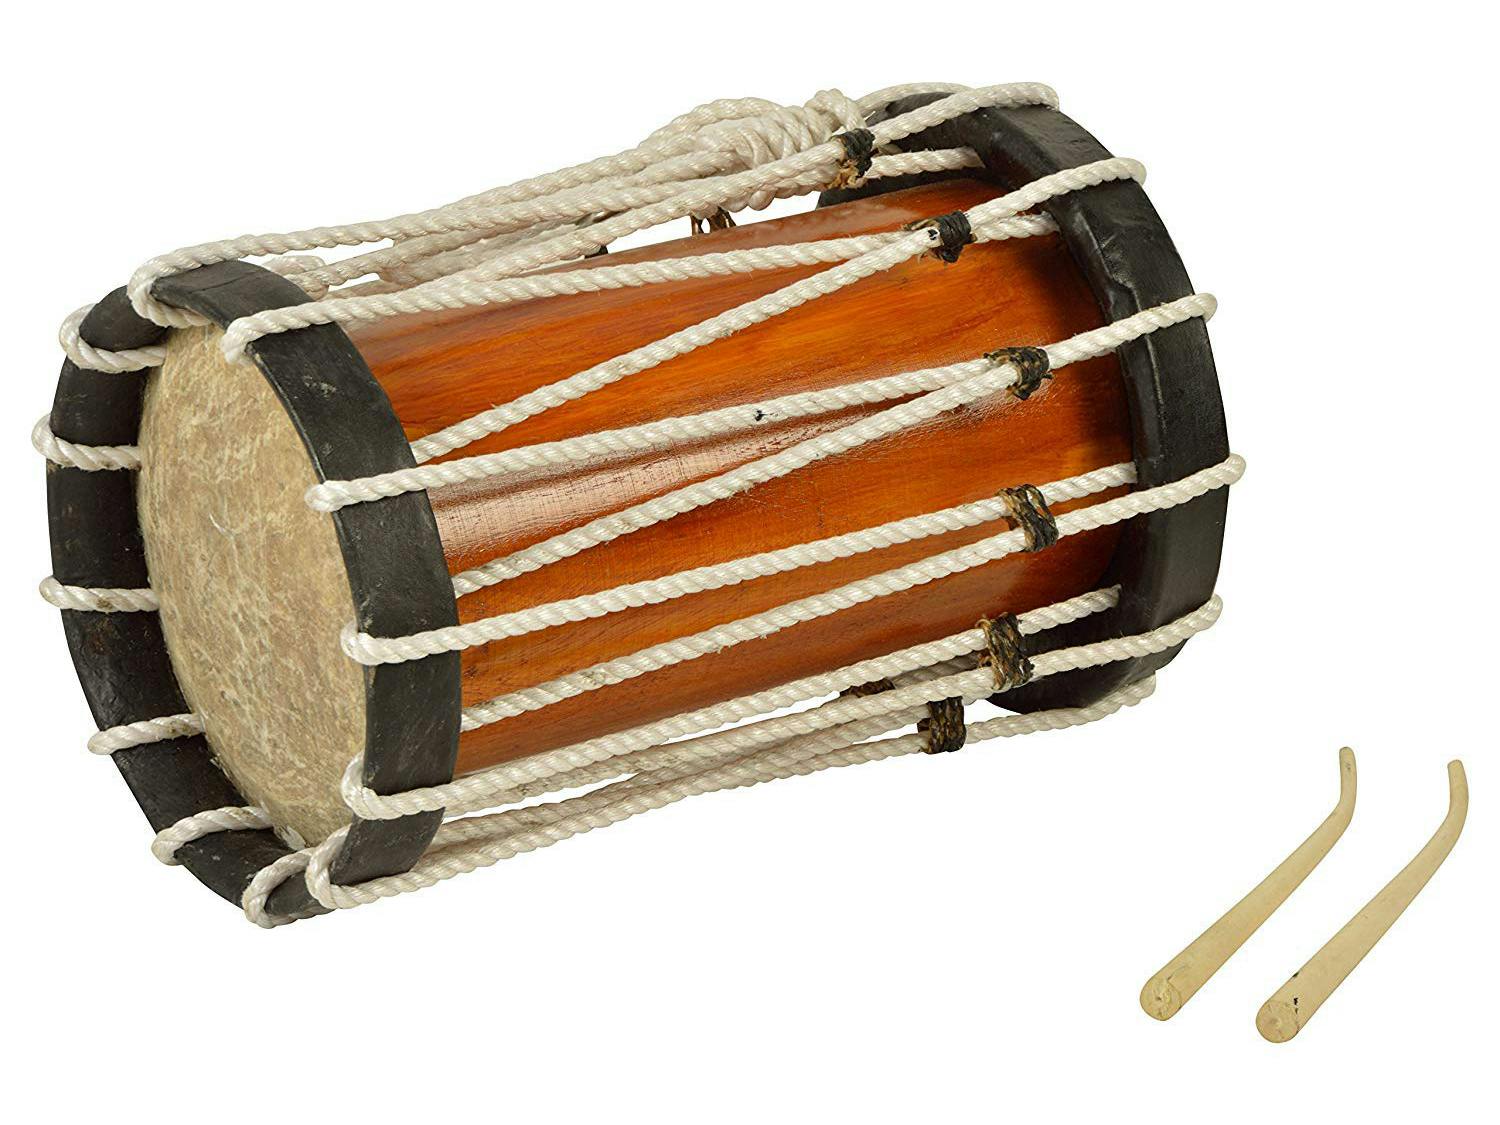 chenda indian musical instrument